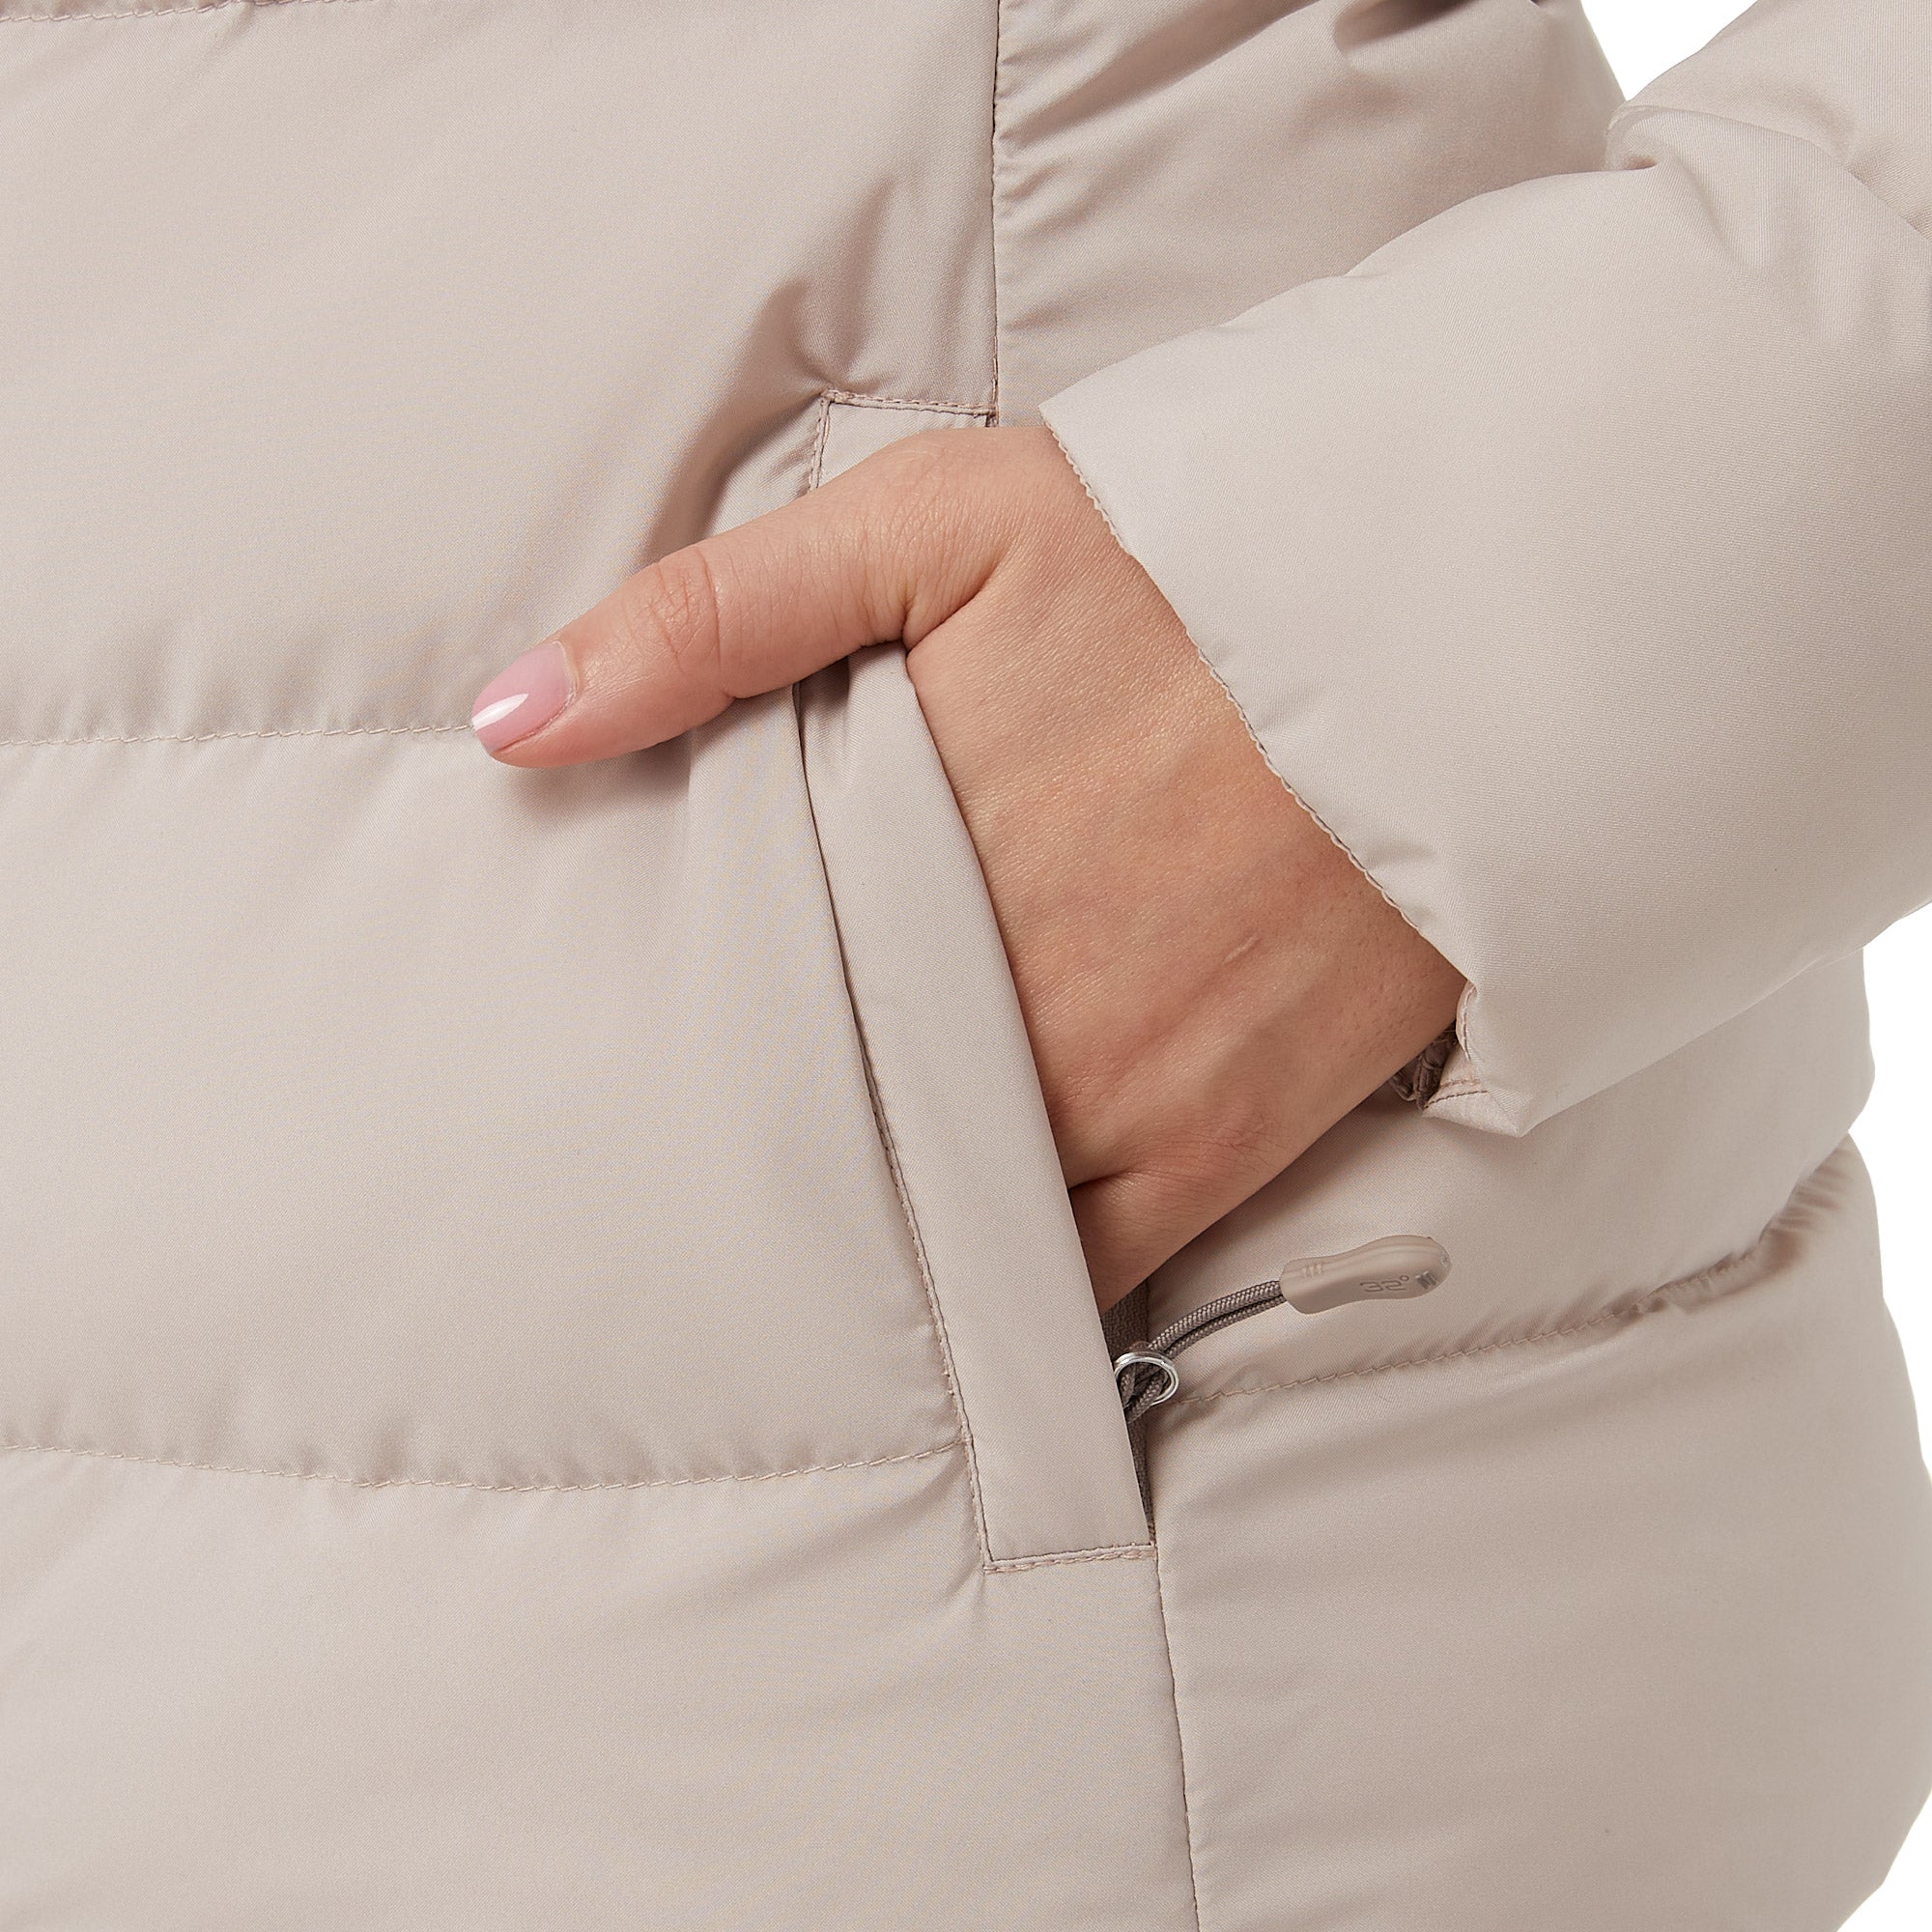 32 DEGREES Heat Women's Tech Fleece Jogger Pant Size: XS, Color: Green  Charcoal 